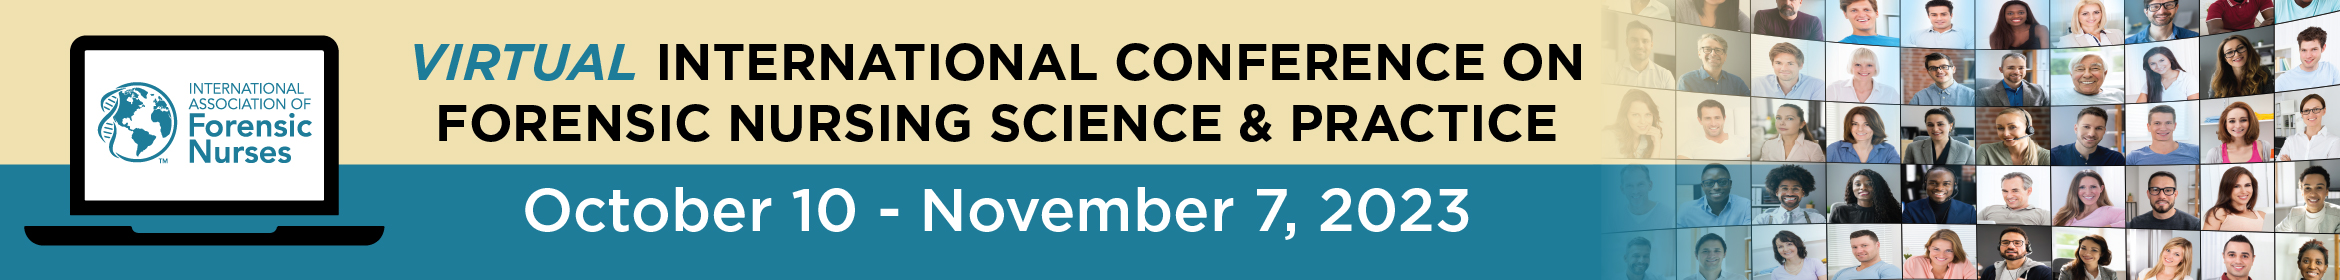 IAFN2023 Virtual Conference Main banner